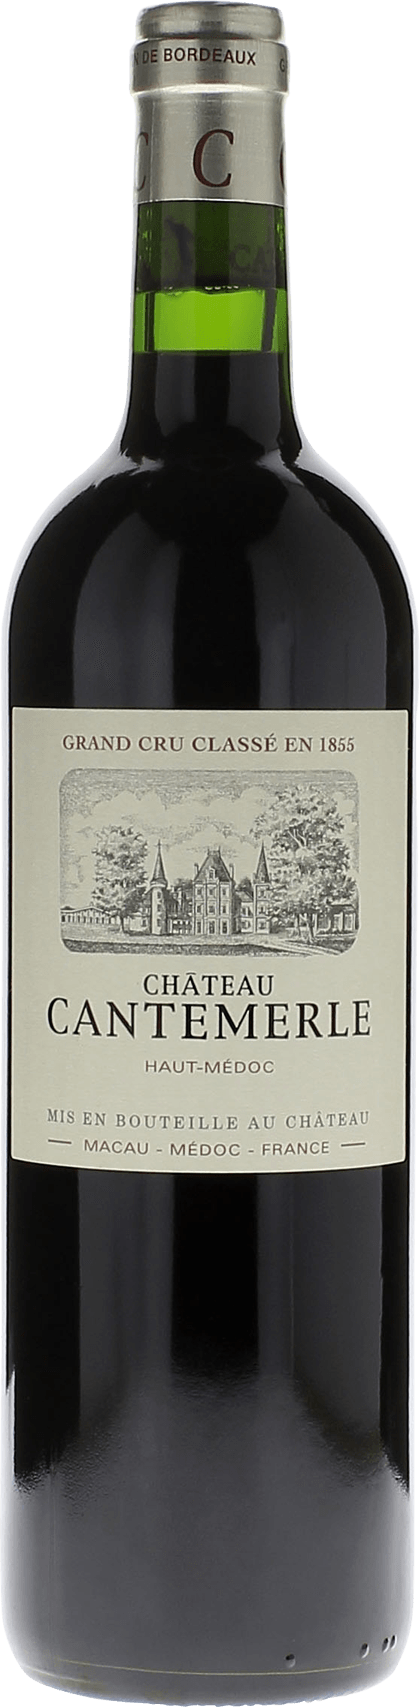 Cantemerle 2012 5me Grand cru class Mdoc, Bordeaux rouge